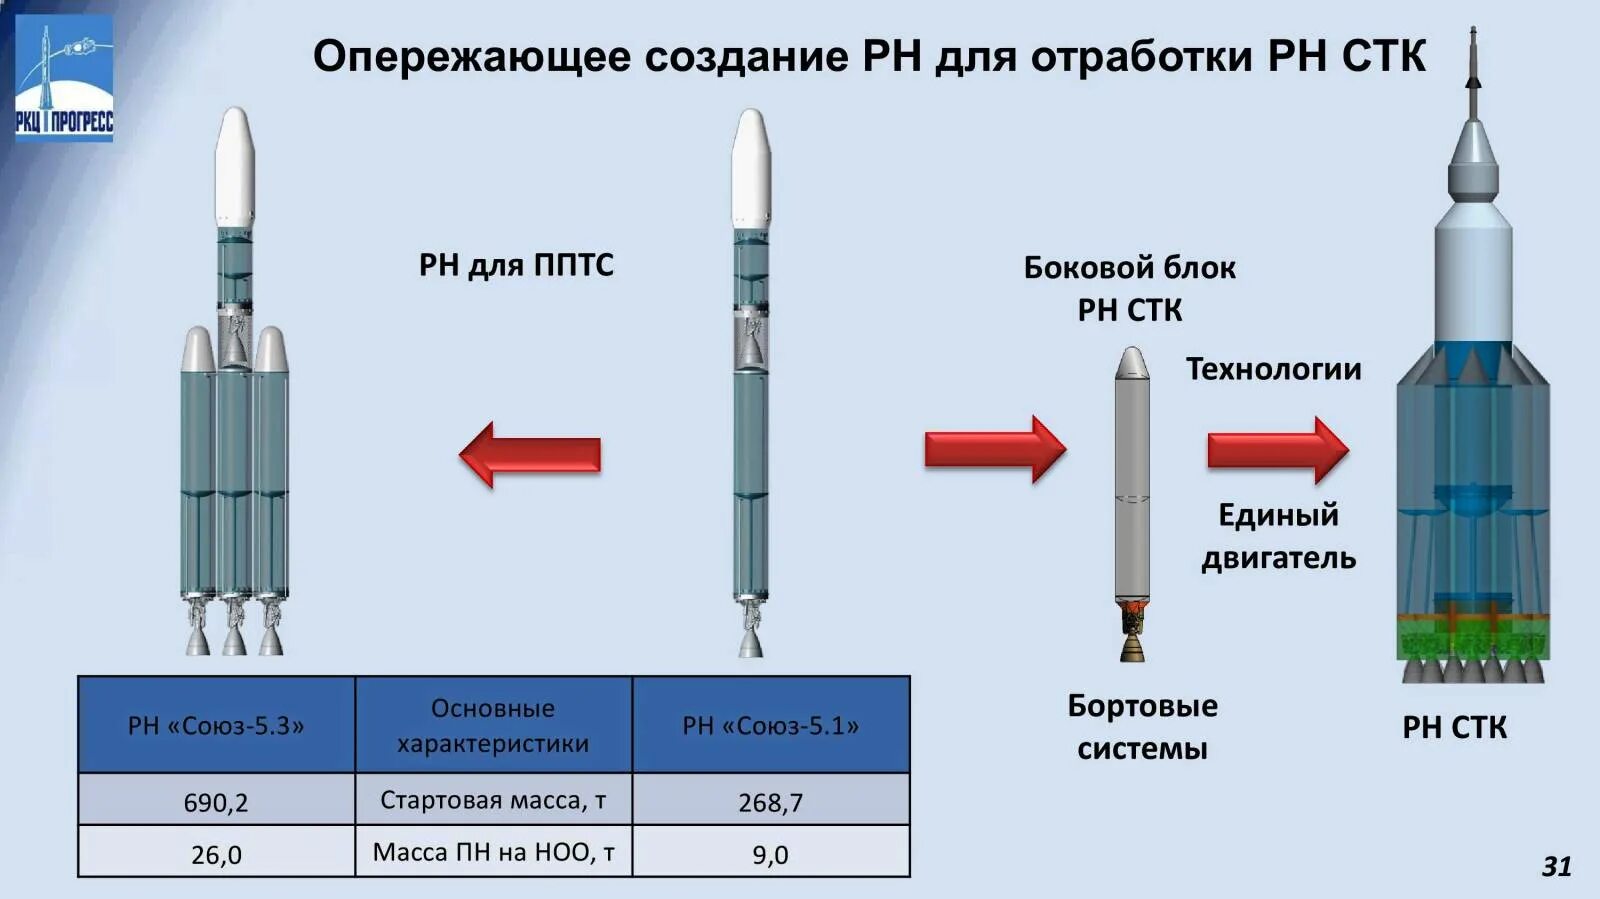 Ангара 5 ракета носитель характеристики. Ракета Ангара сверхтяжелая. Ракета носитель Ангара а5 чертеж. Союз-5 ракета-носитель. «Енисей» — Российская ракета-носитель сверхтяжёлого класса.